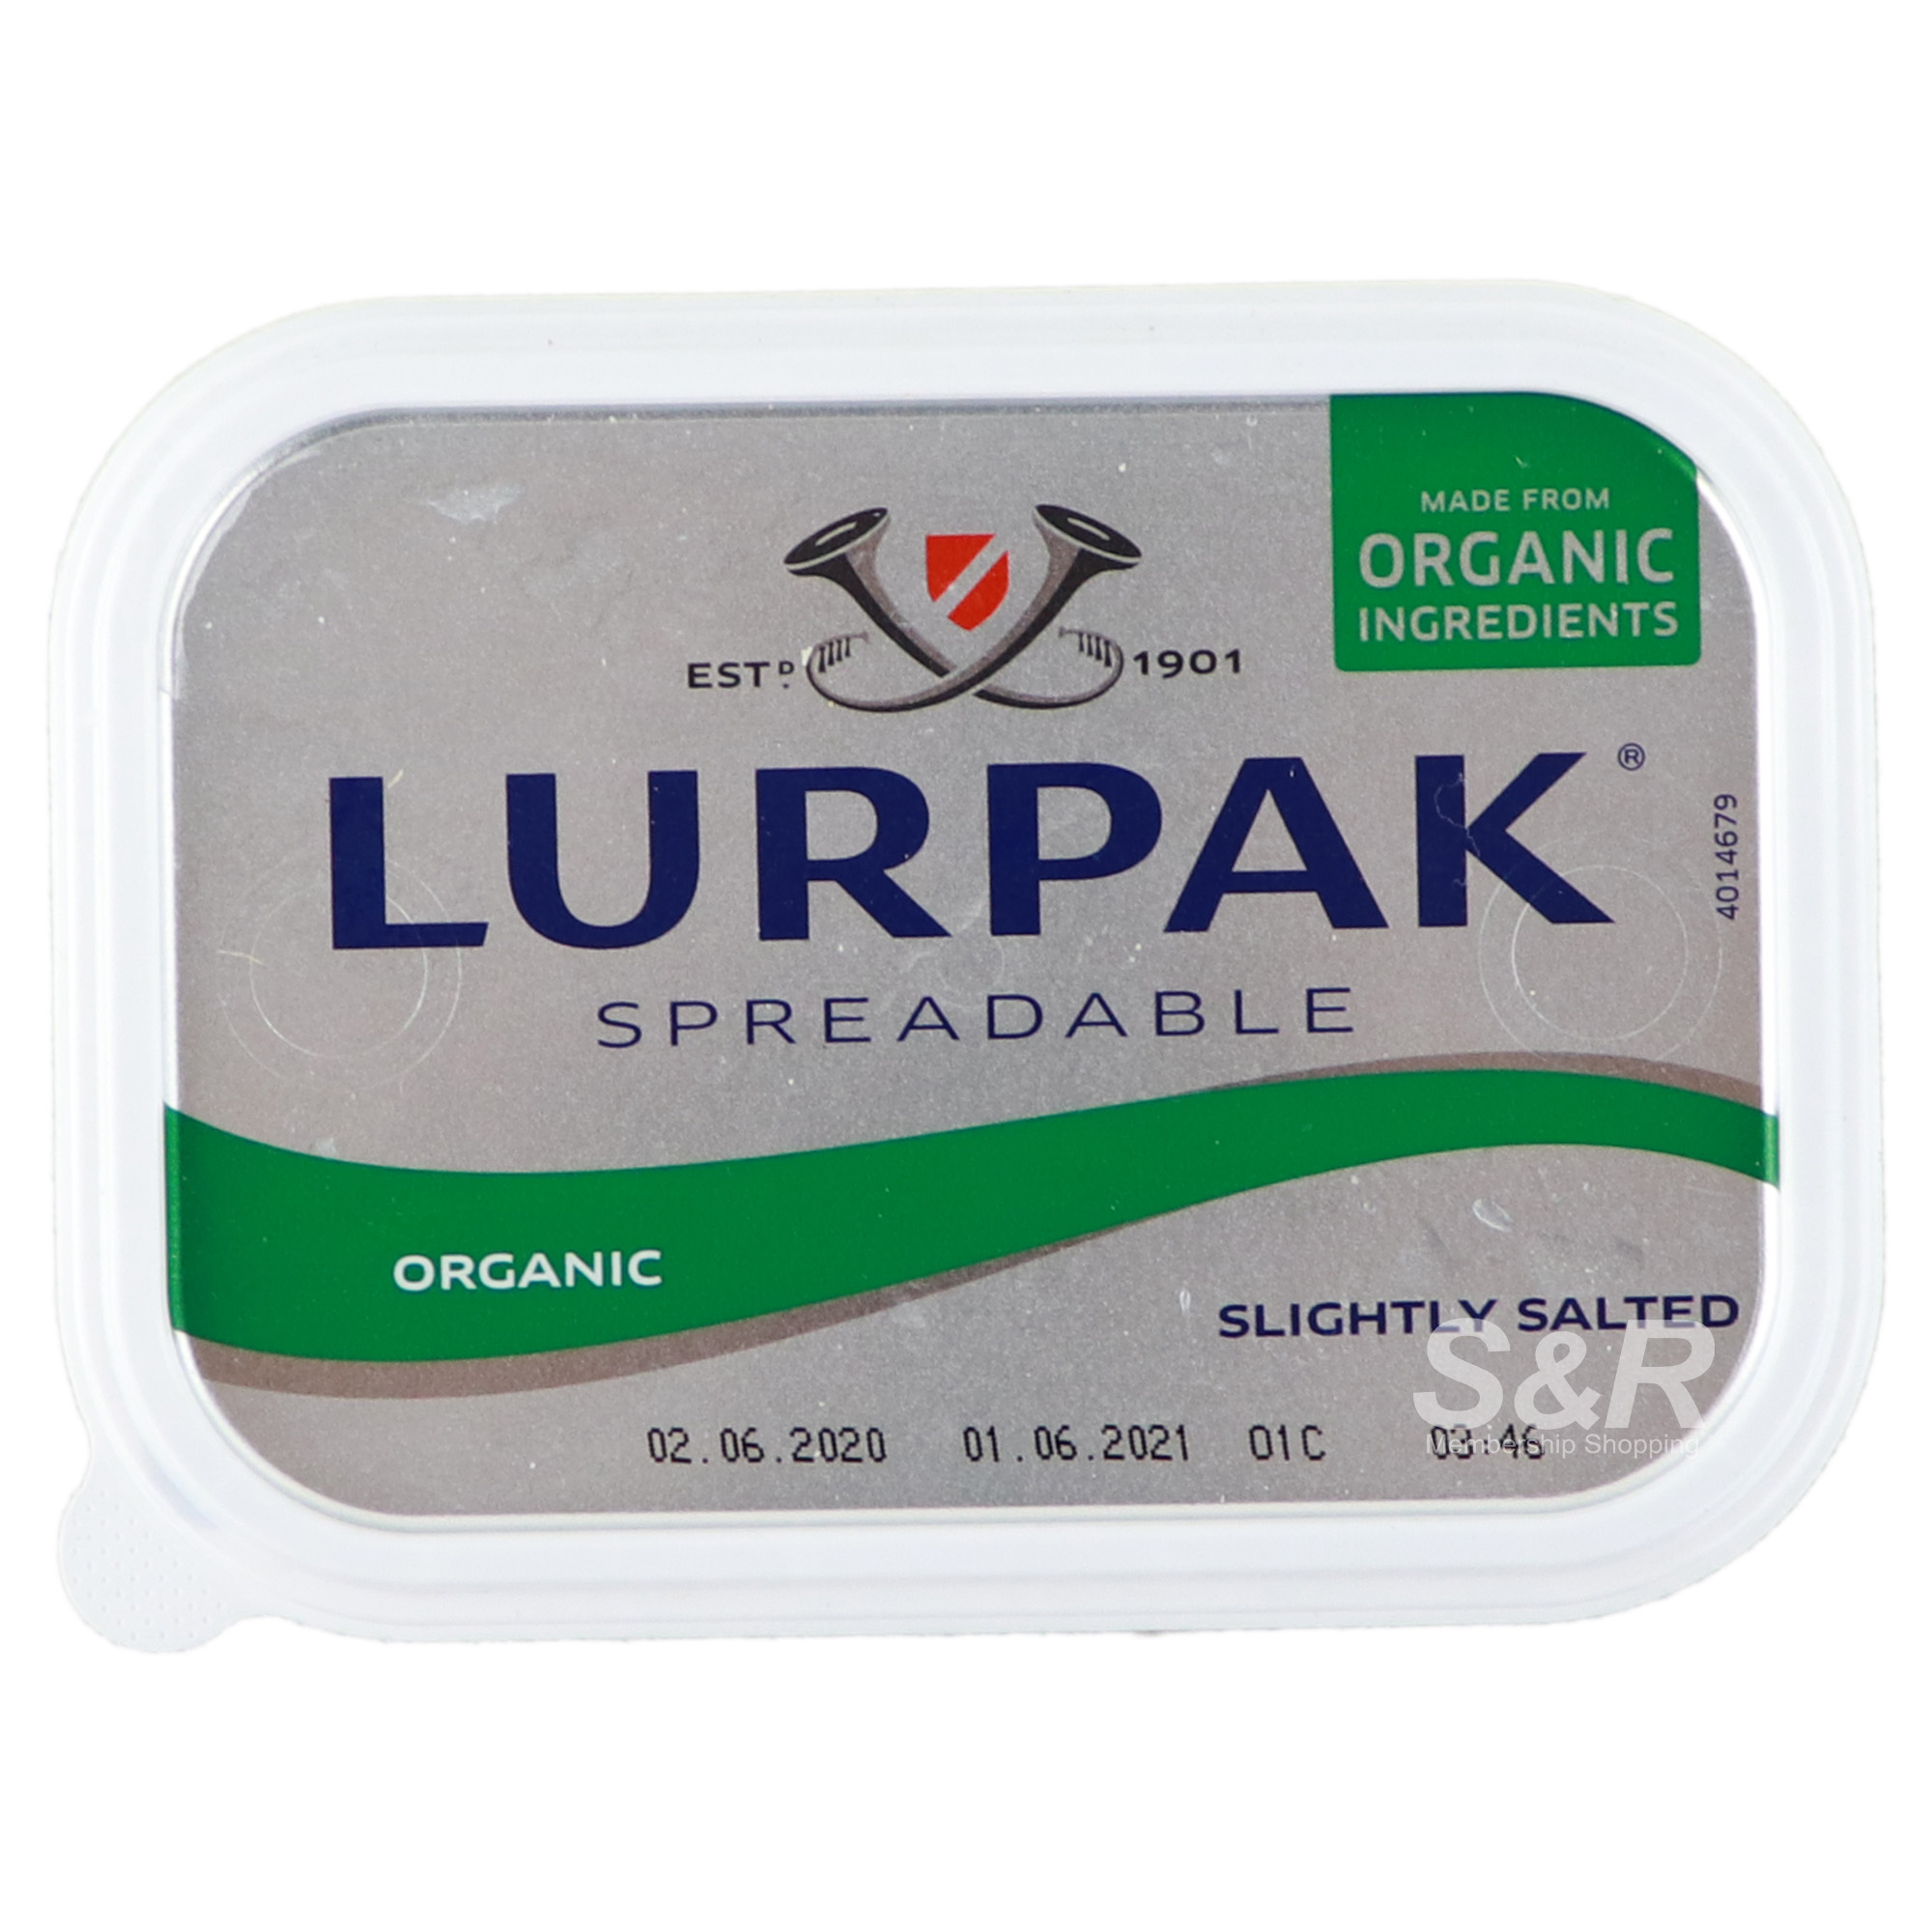 Lurpak Spreadable Organic Slightly Salted 200g